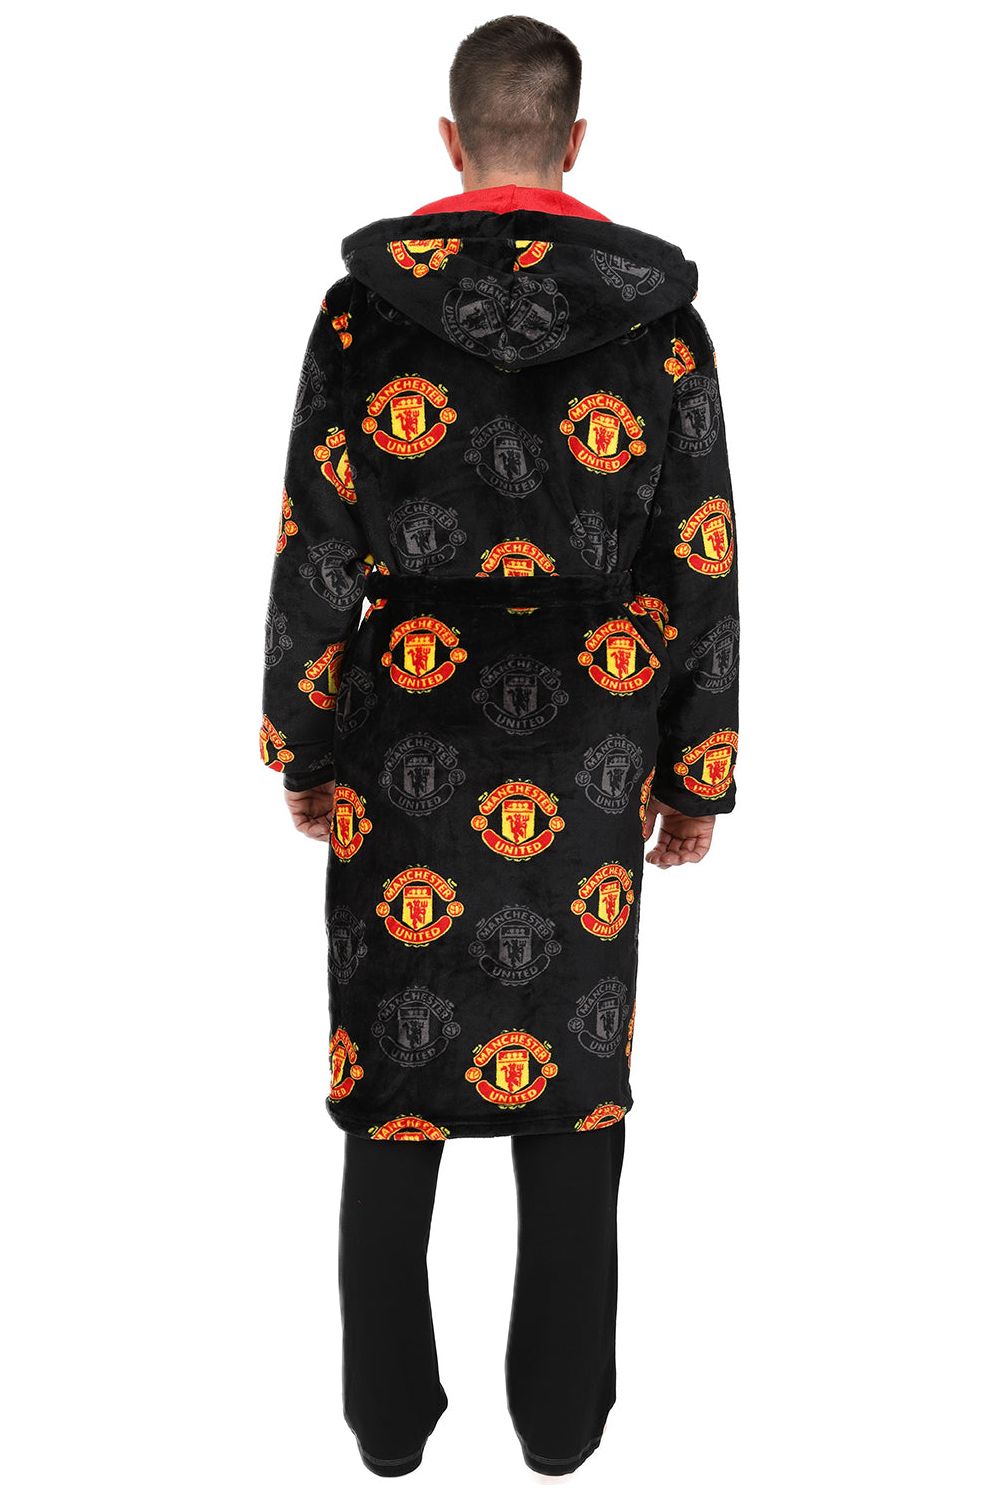 Manchester City Mens Dressing Gown Robe Hooded Fleece OFFICIAL Football  Gift | eBay